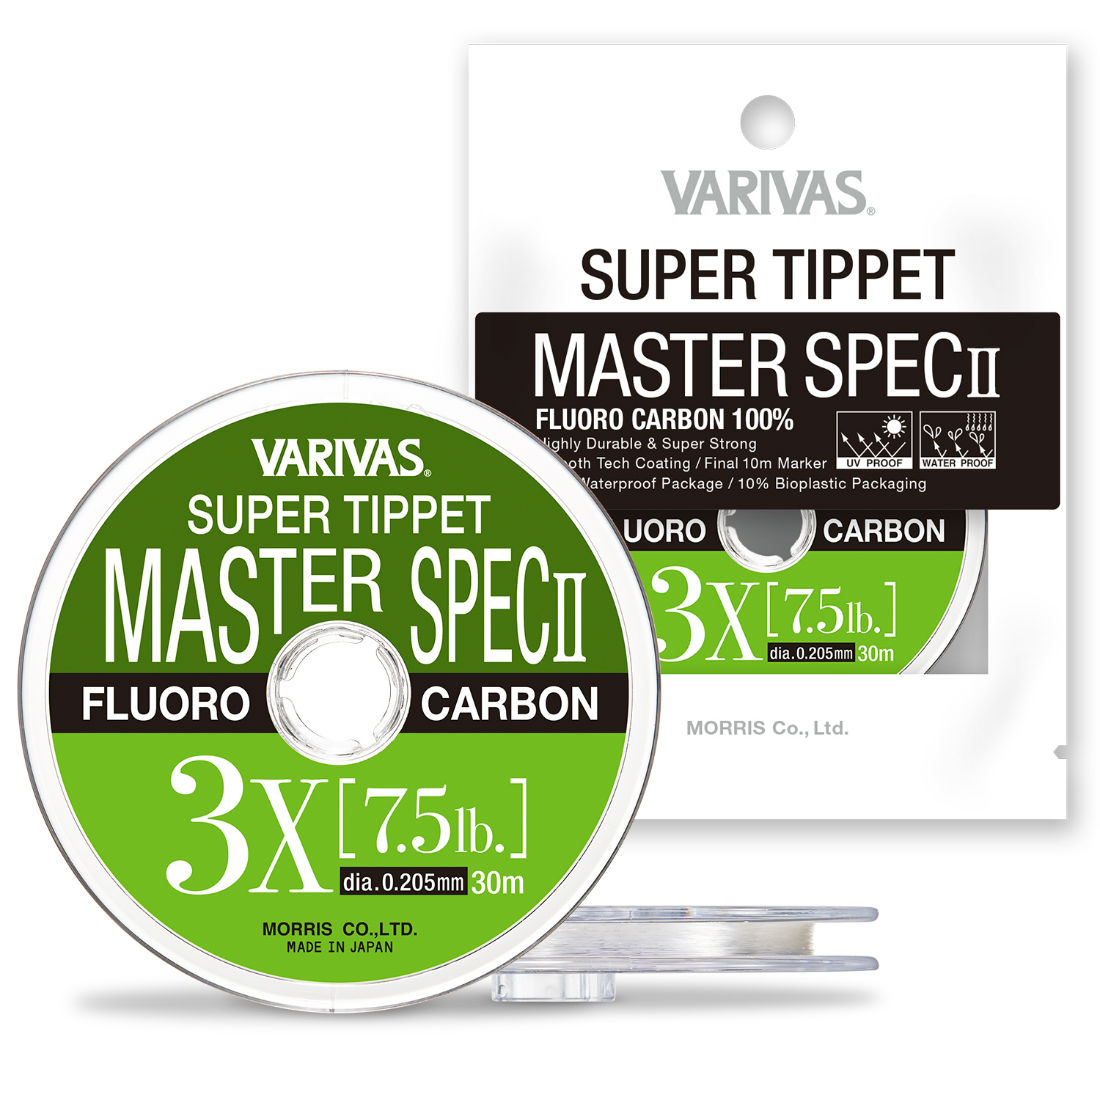 FIR VARIVAS SUPER TIPPET MASTER SPEC ll FLUORO 6X 30m 0.128mm 3.5lb